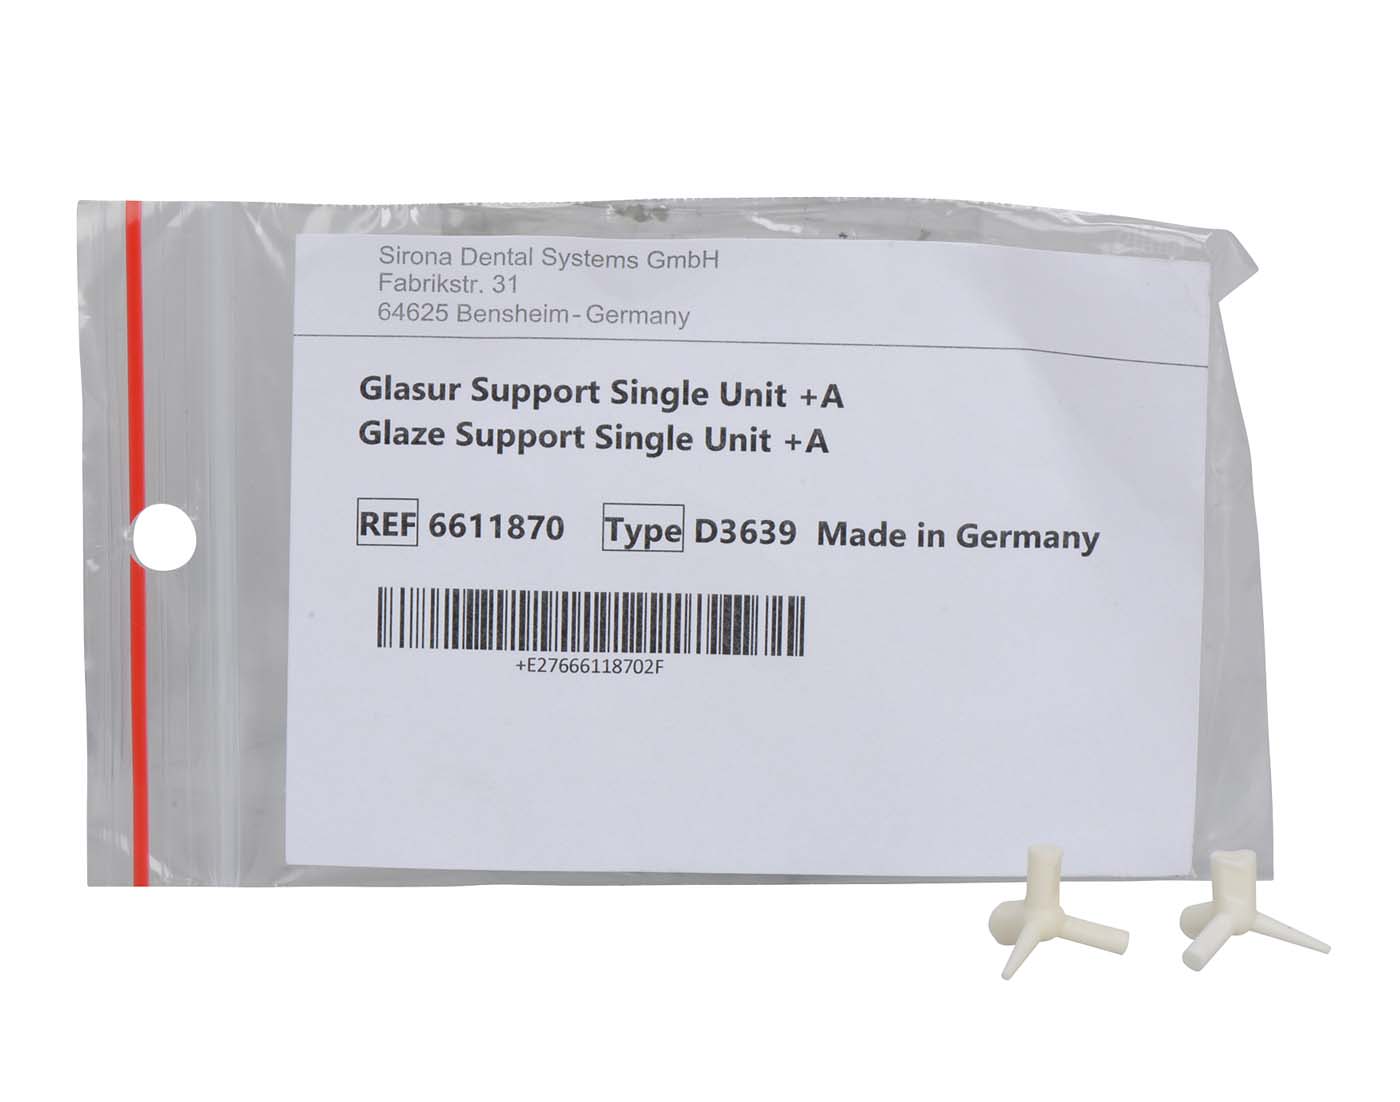 Glasur Support Single Unit +A Dentsply Sirona